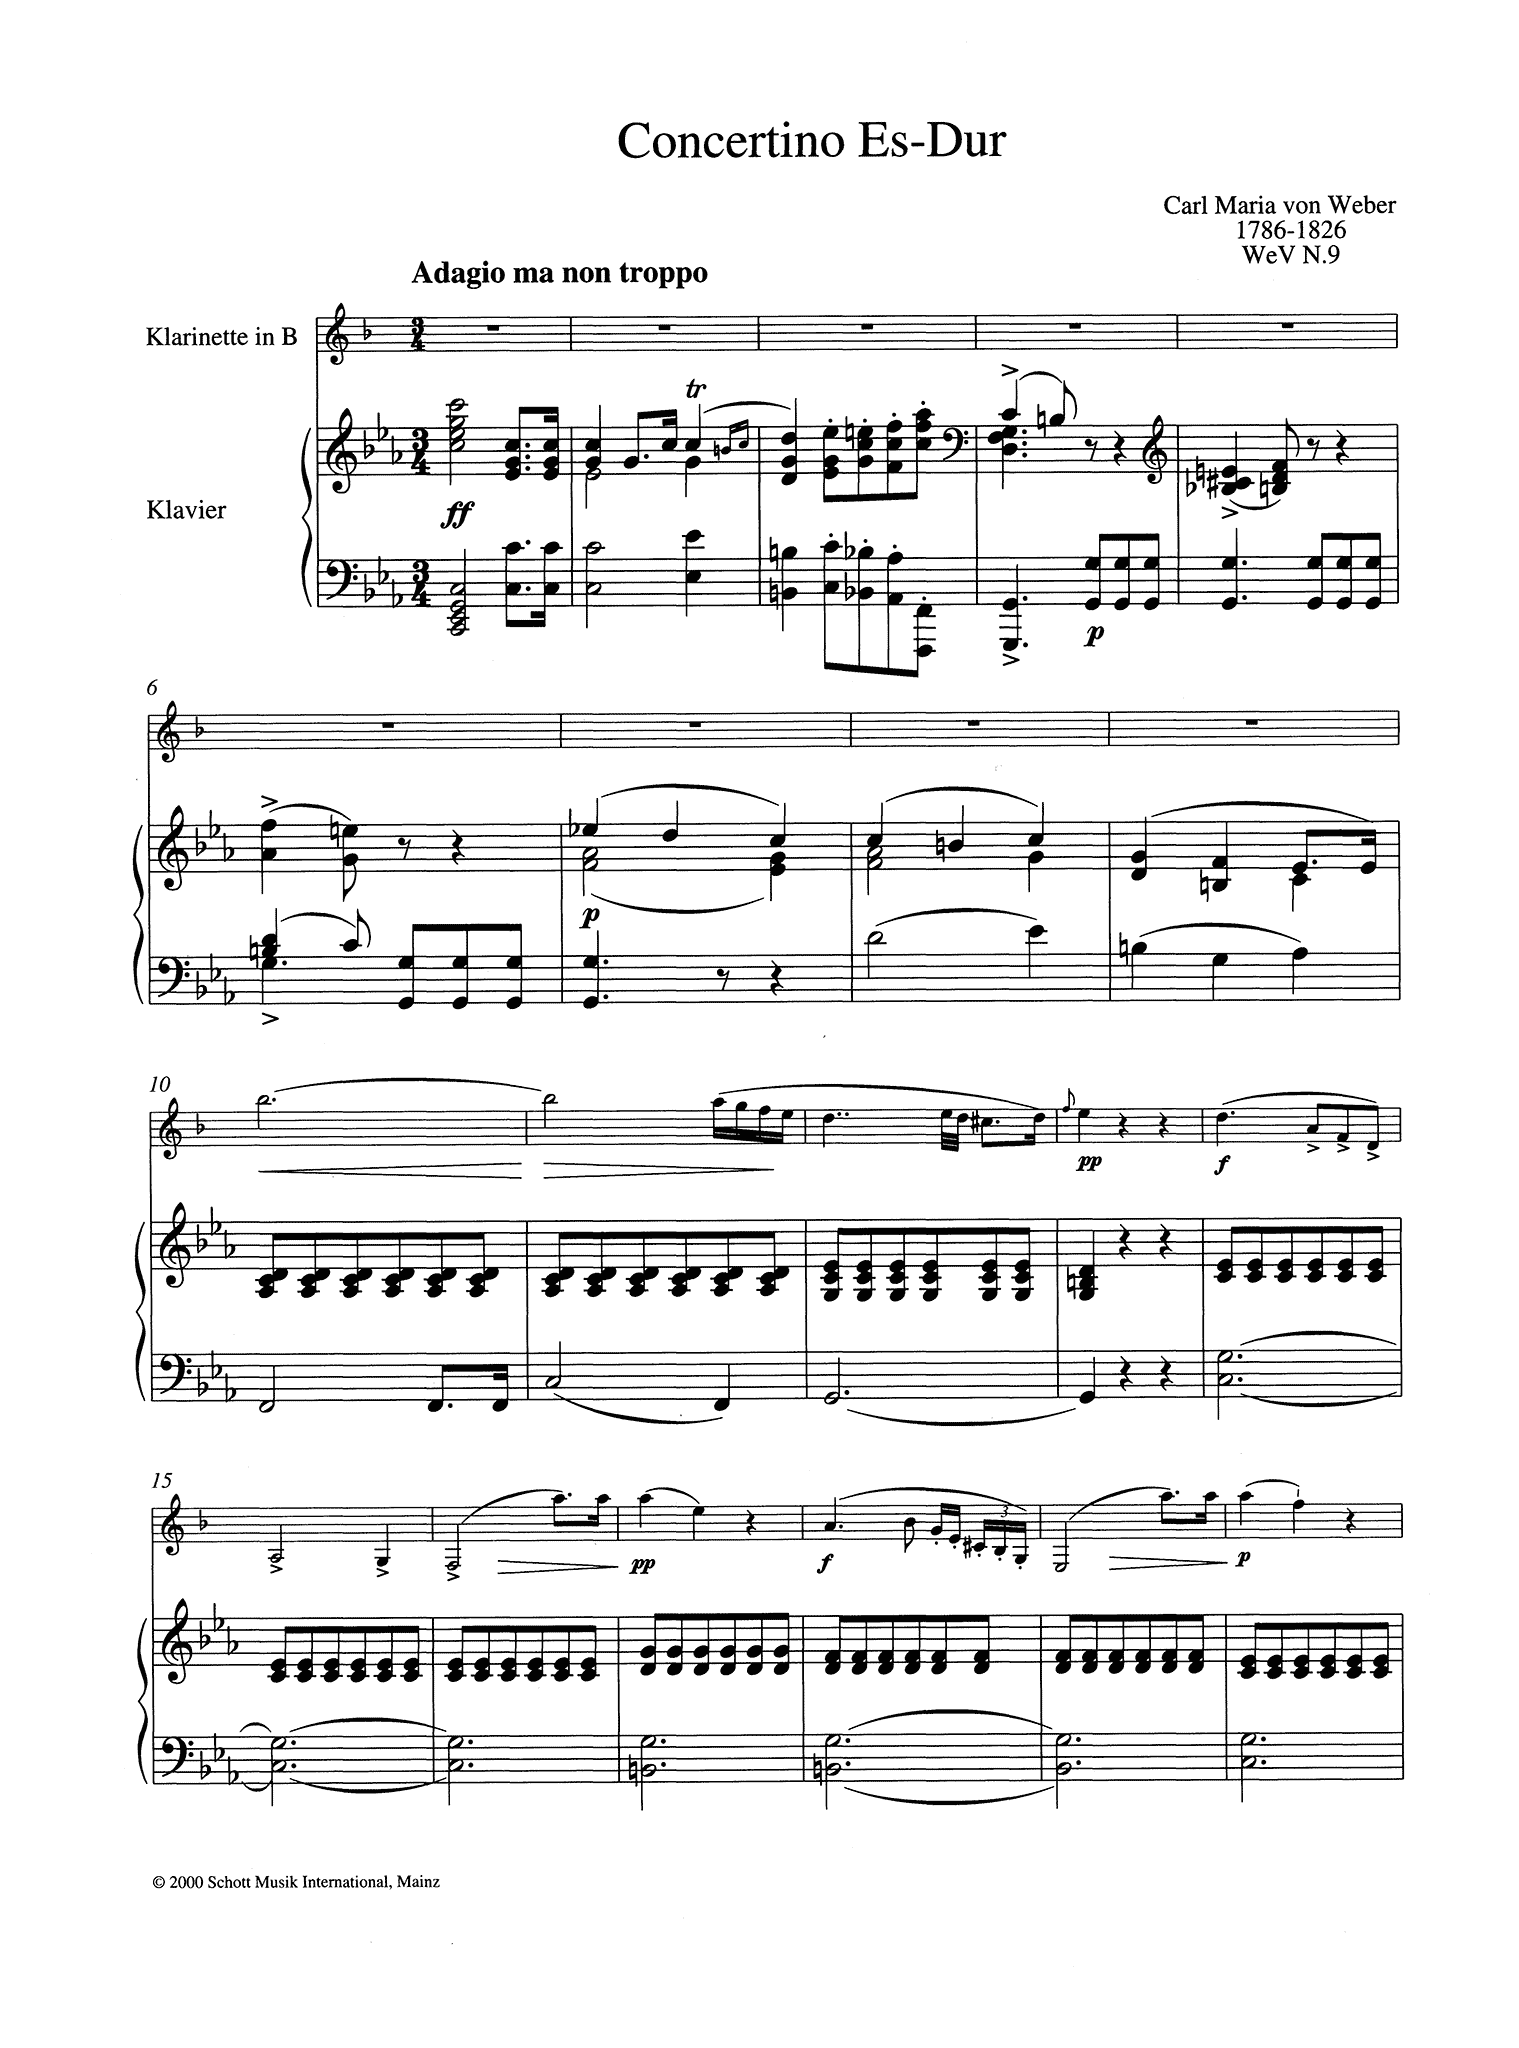 Concertino in E-flat Major, Op. 26, J. 109 Score